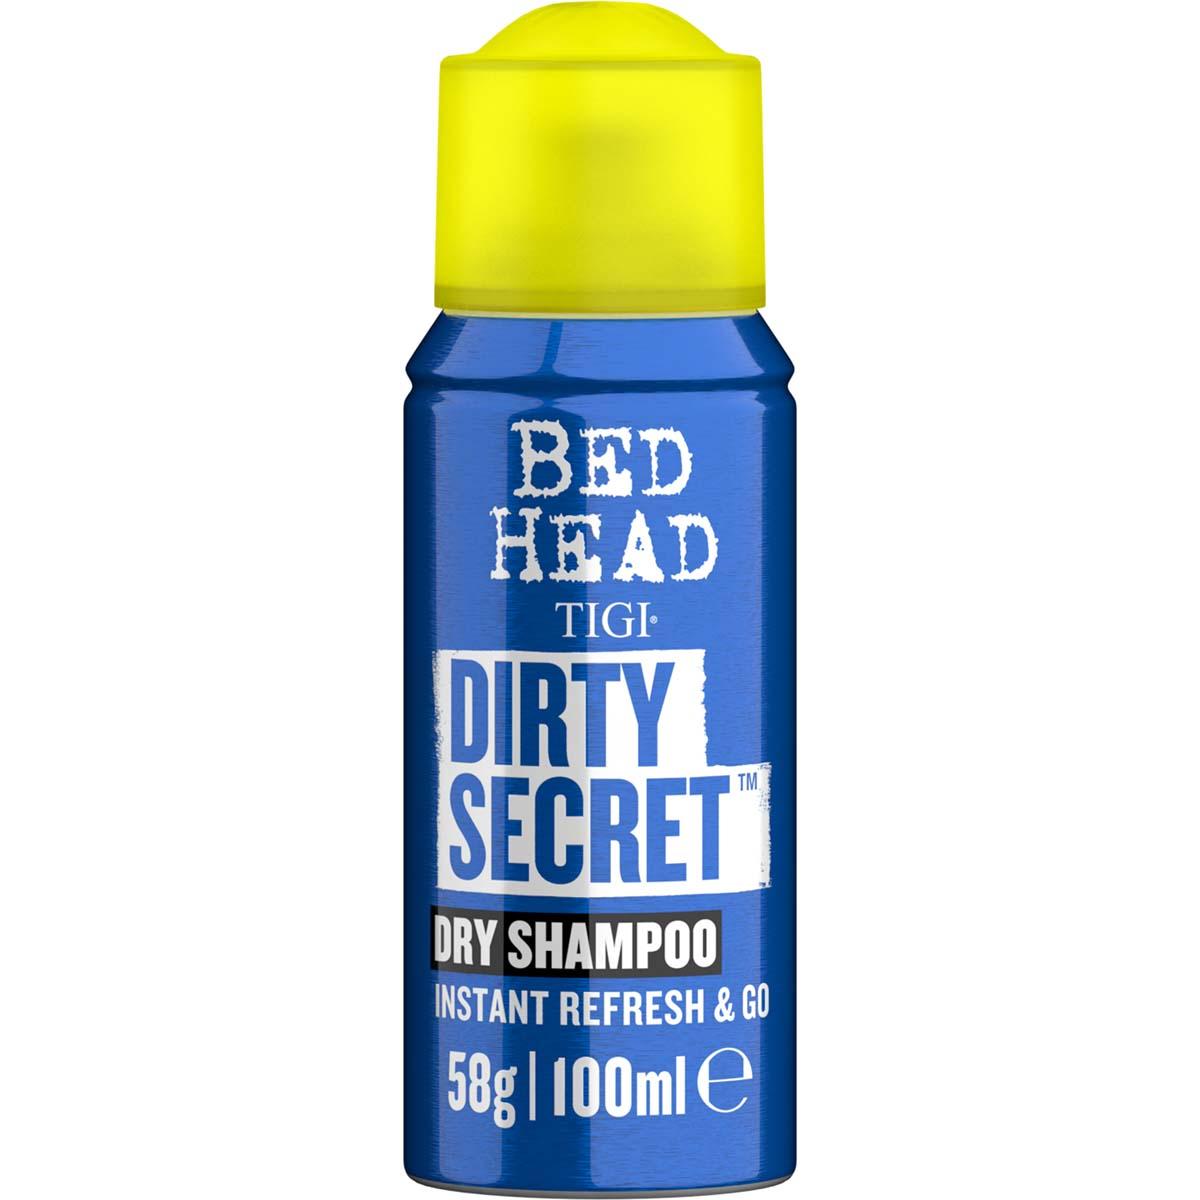 100ml travel shampoo